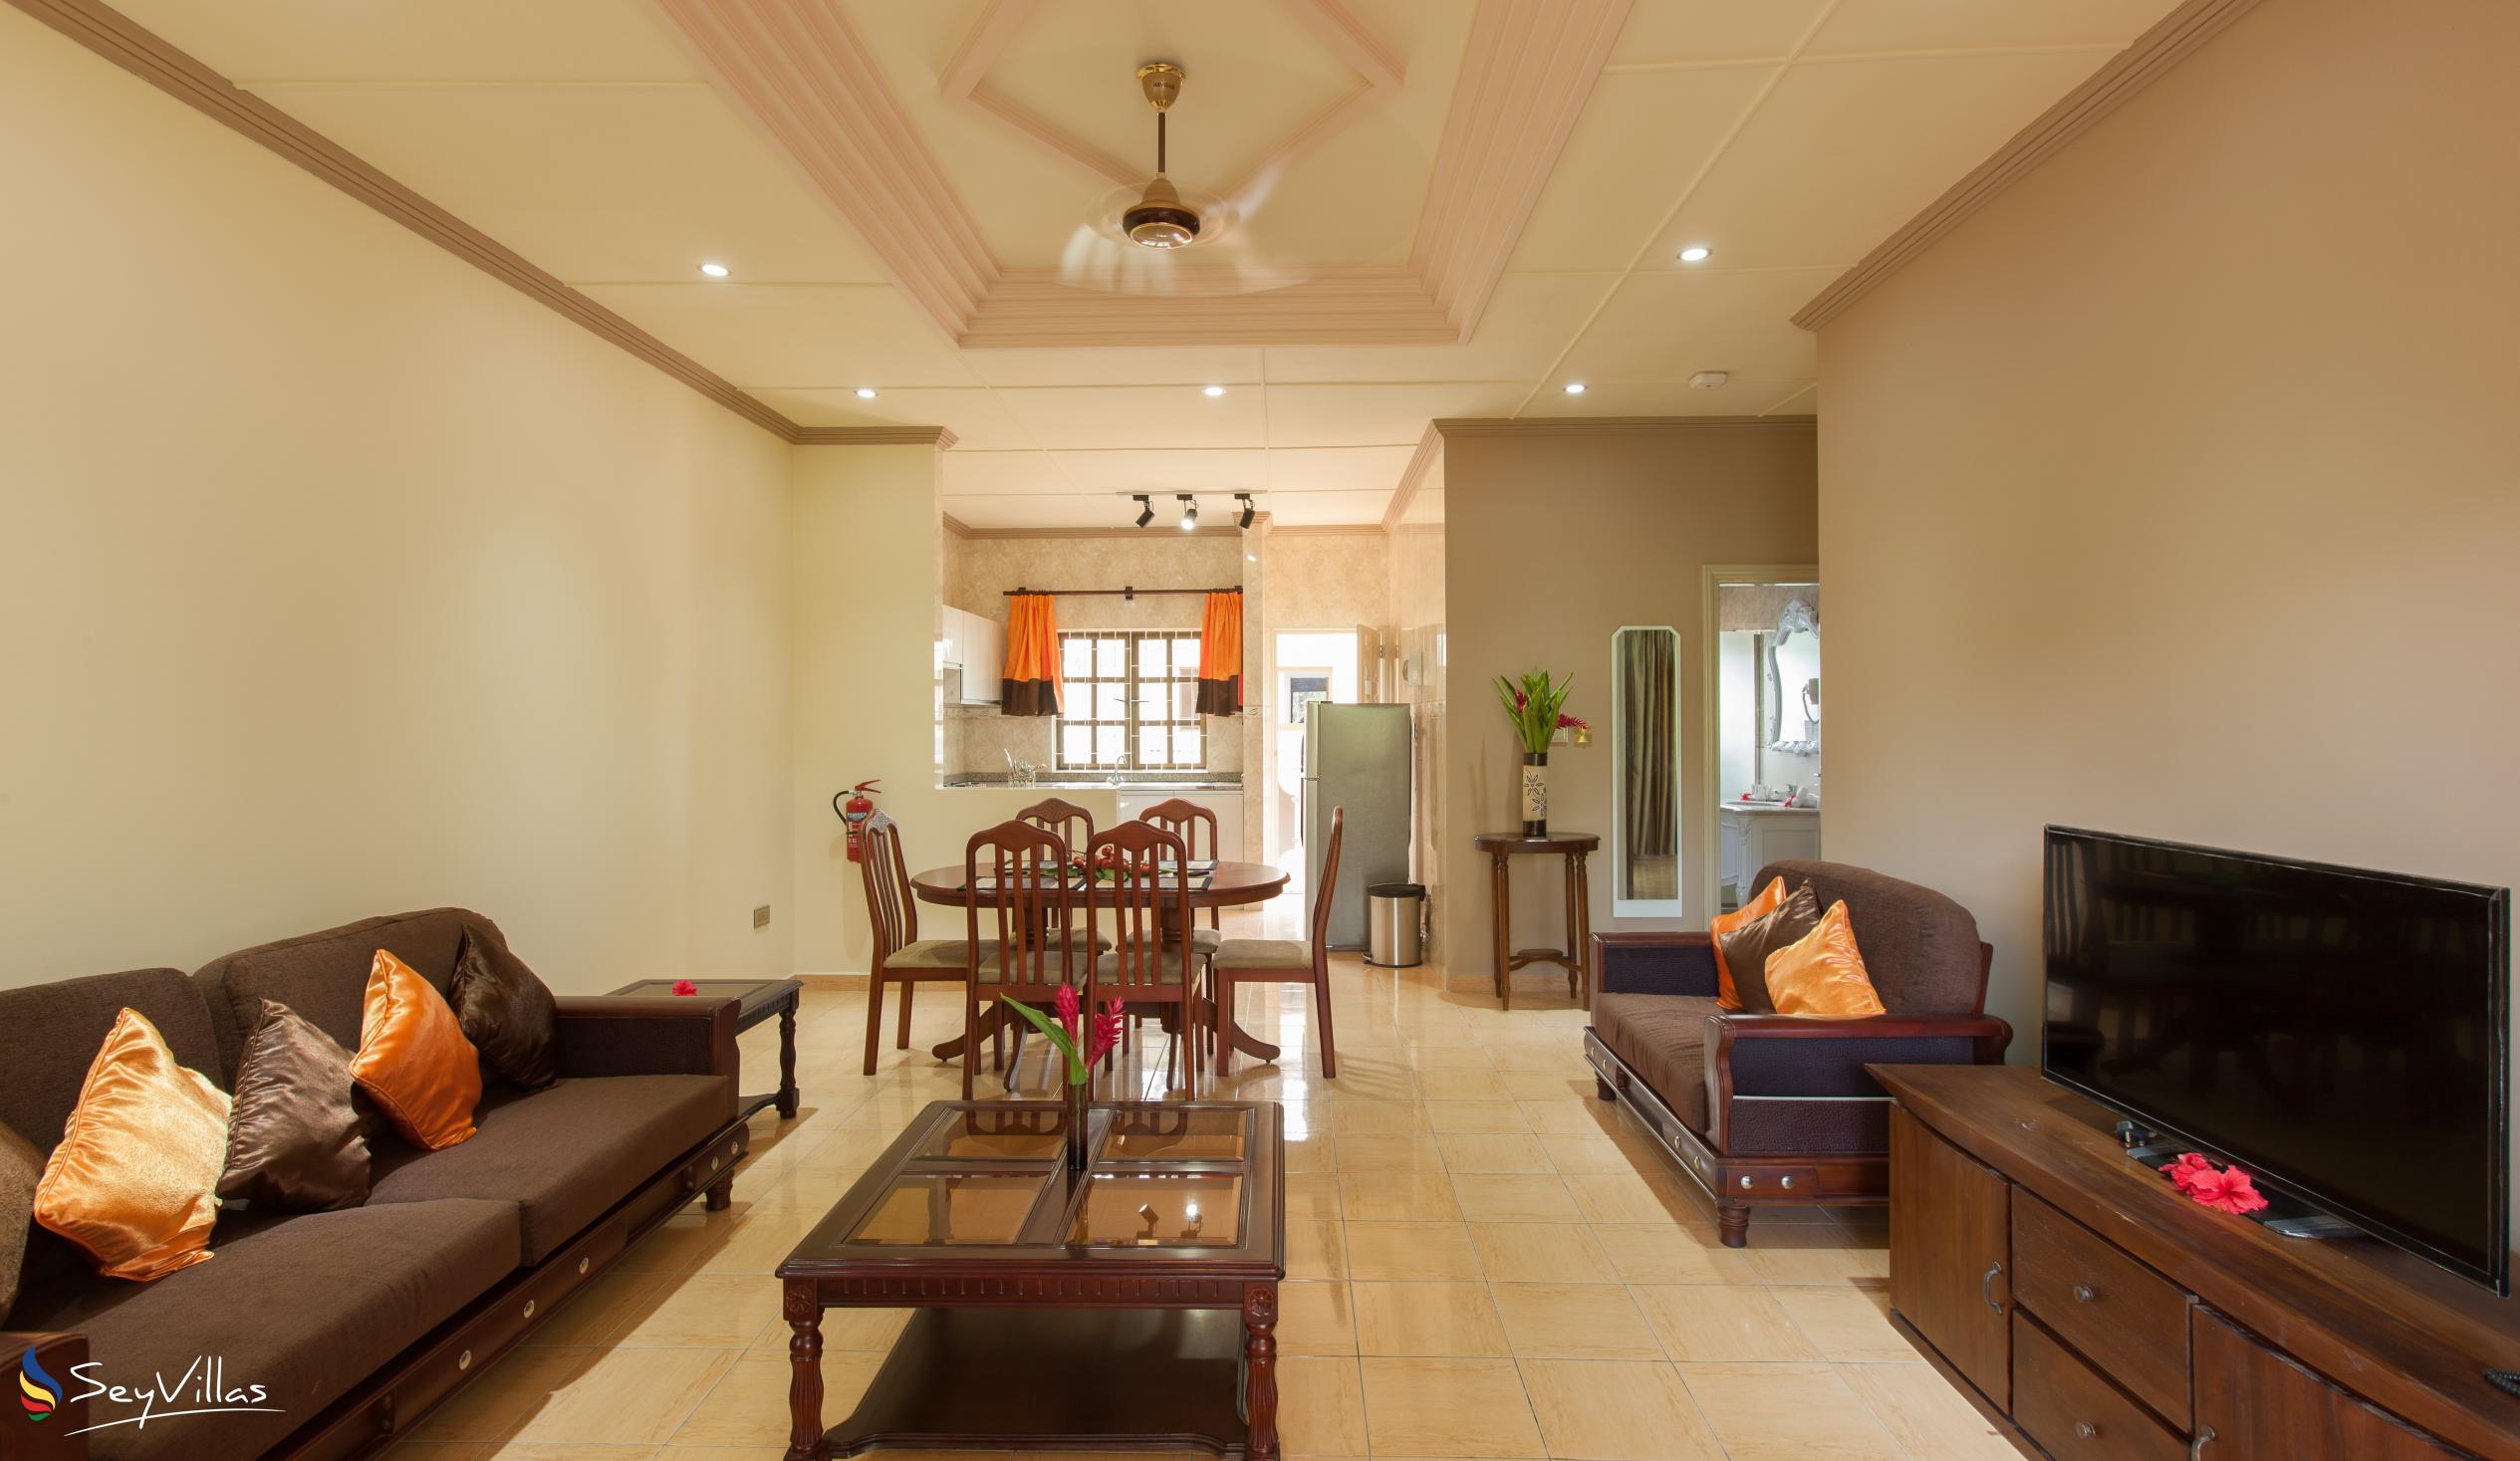 Foto 101: Chez Bea Villa - Appartement 1 chambre - Praslin (Seychelles)